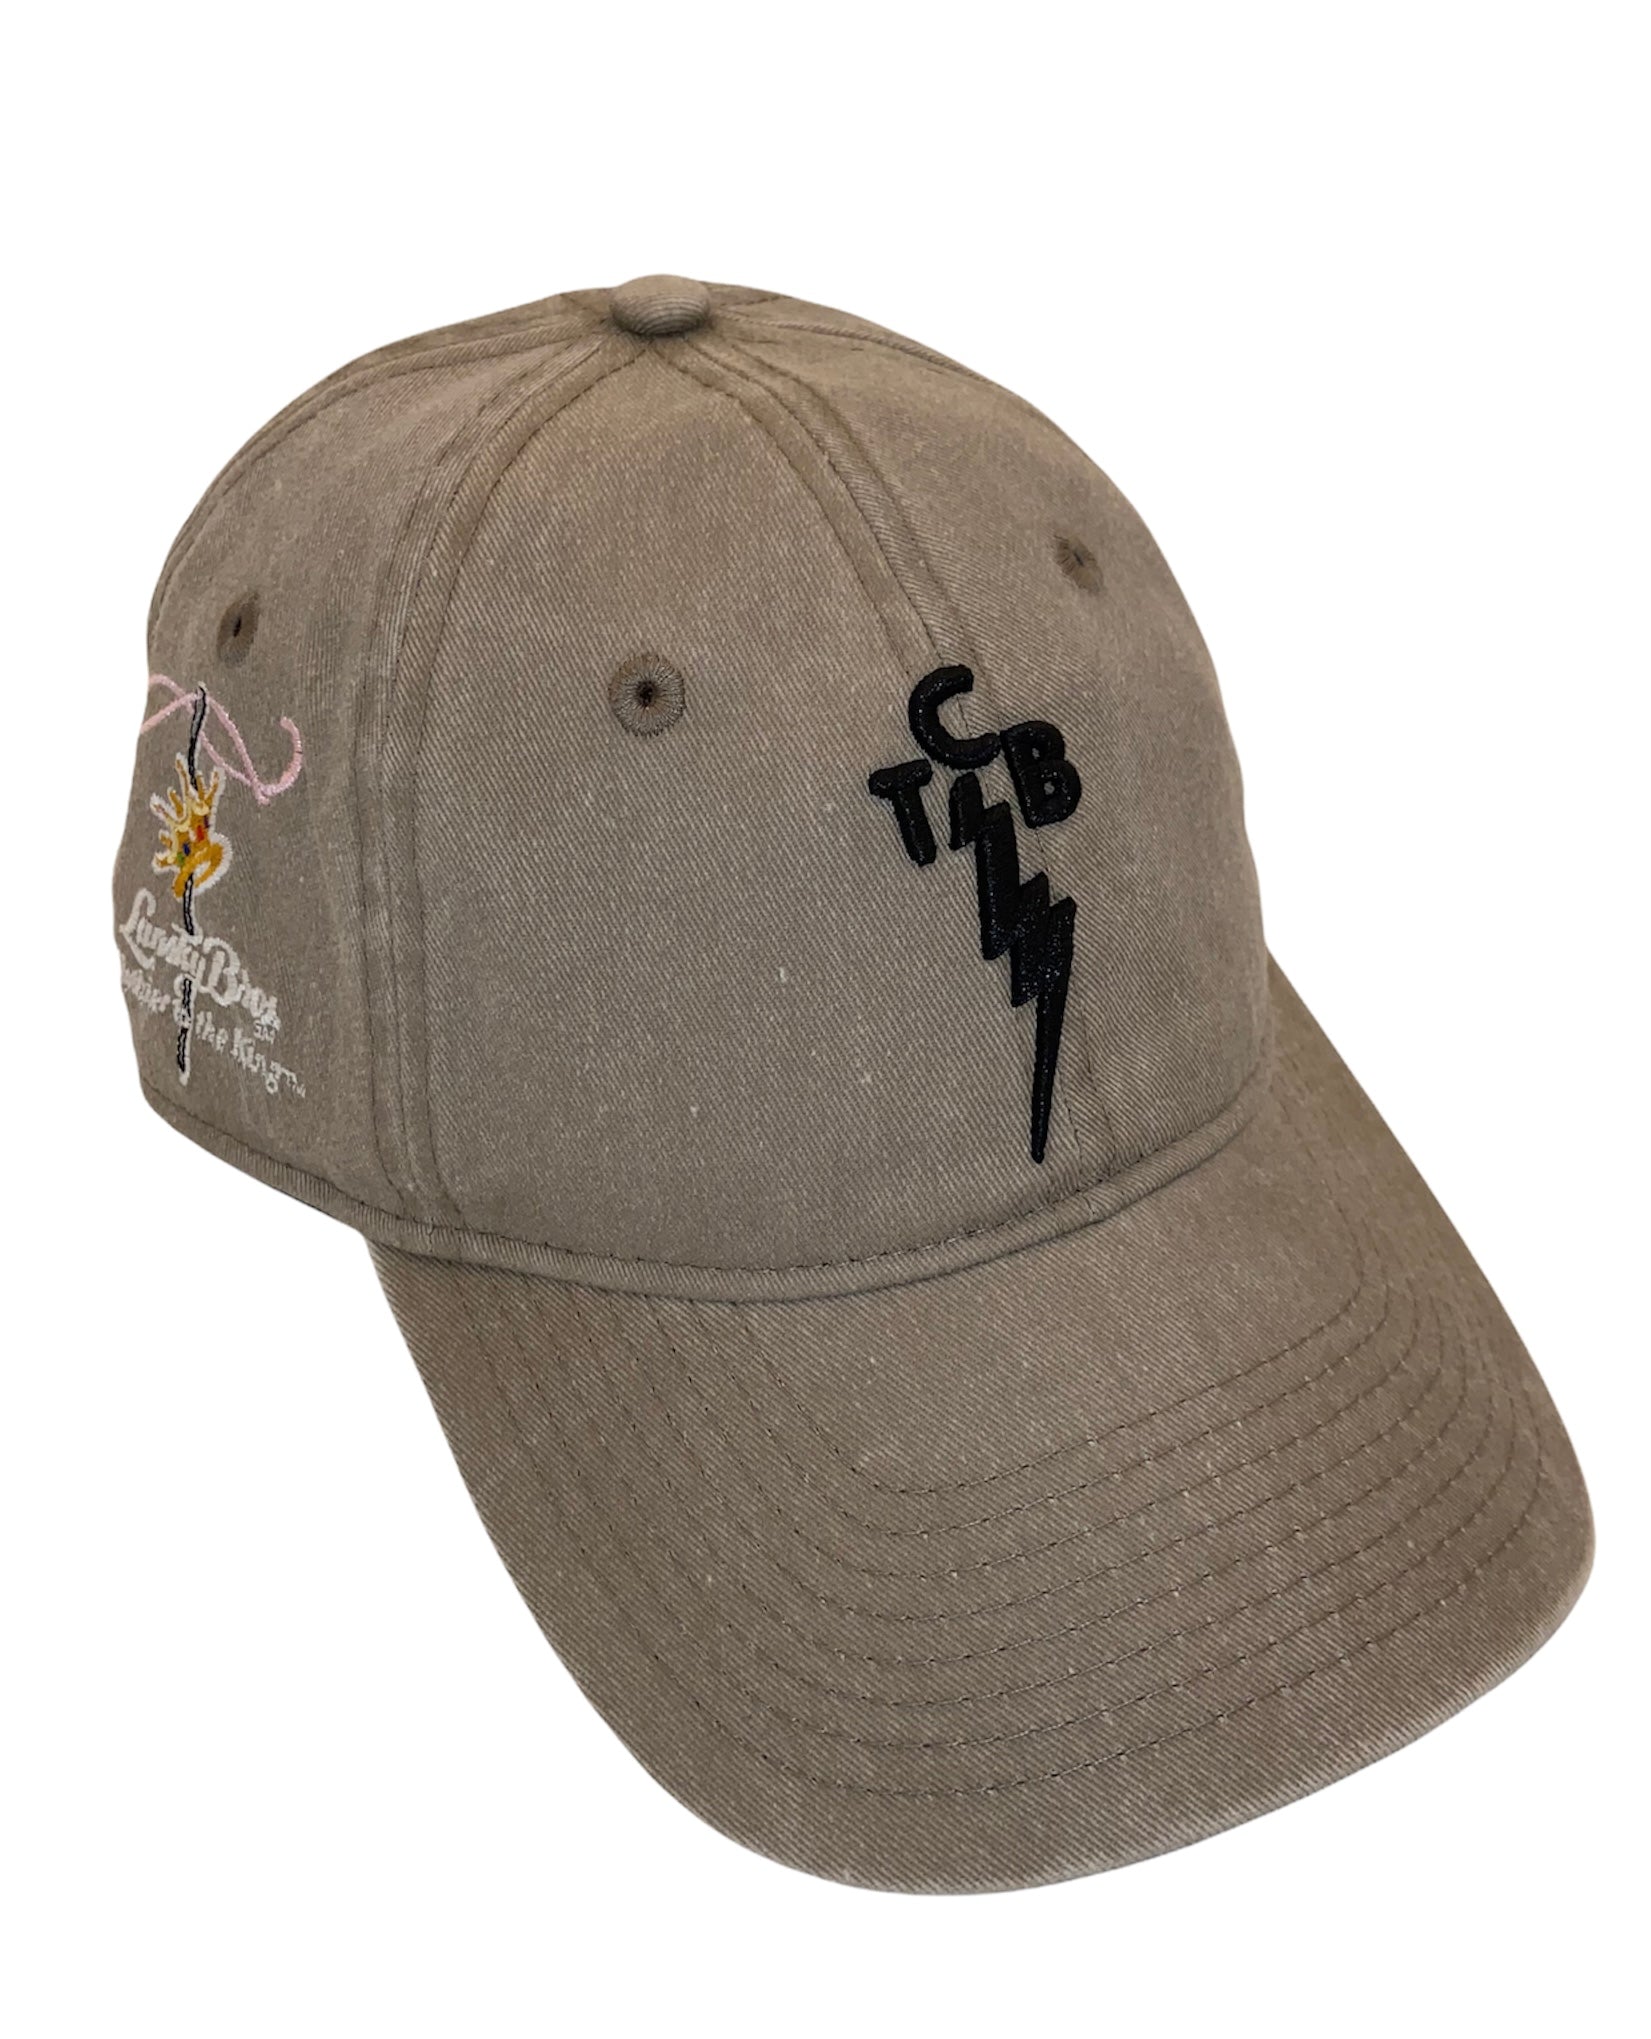 Elvis "TCB" Hat